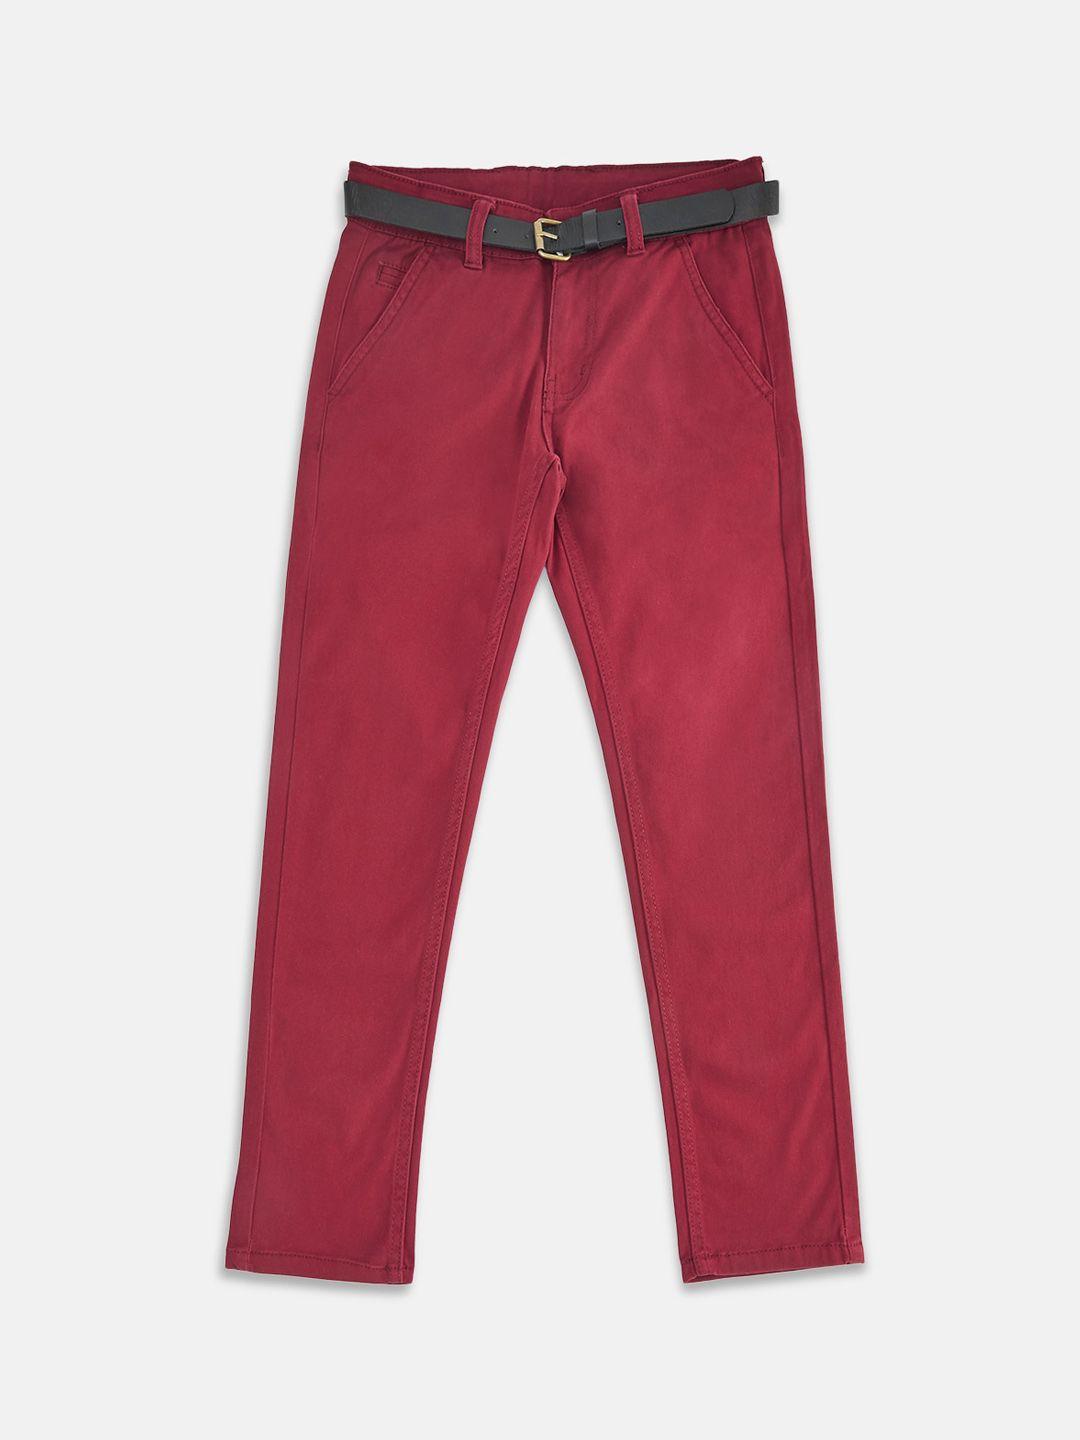 pantaloons junior boys maroon cotton chinos trousers